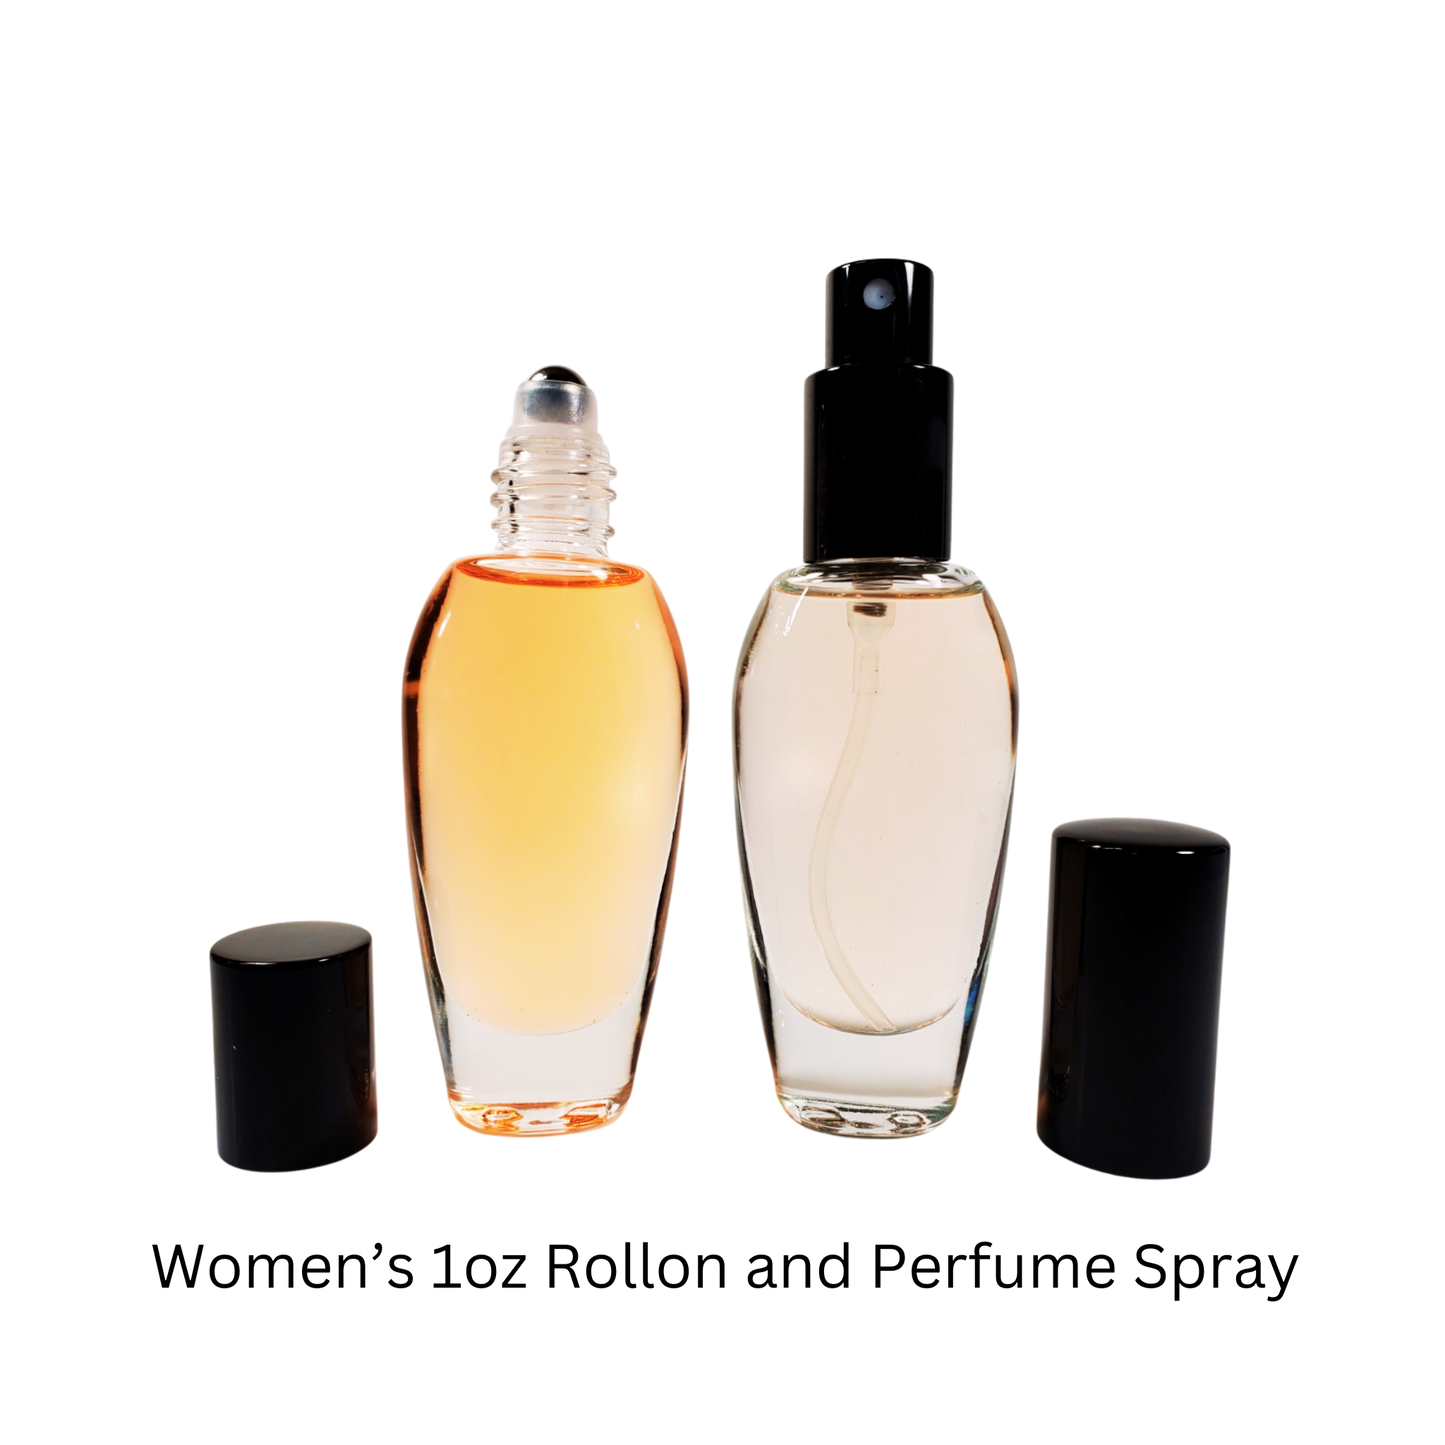 Vetiver & Golden Vanilla Type* / Perfume Body Oil / Eau de Parfum